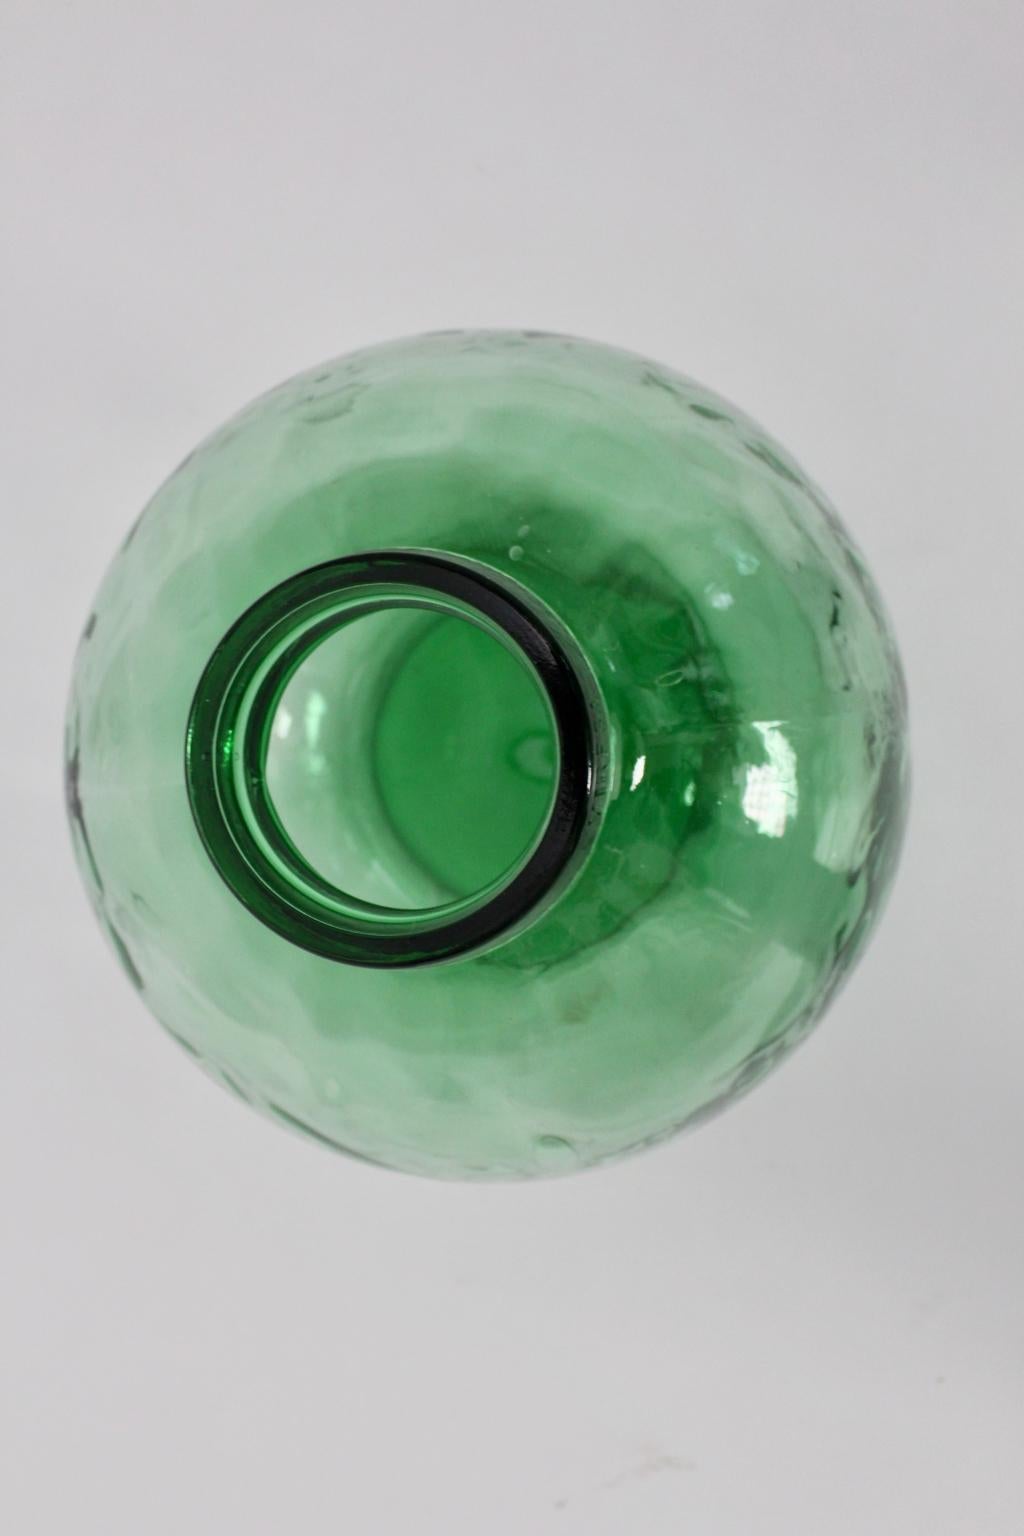 Blown Glass Green Handblown Vintage Glass Bottle Demijohn by Viresa, 1970s